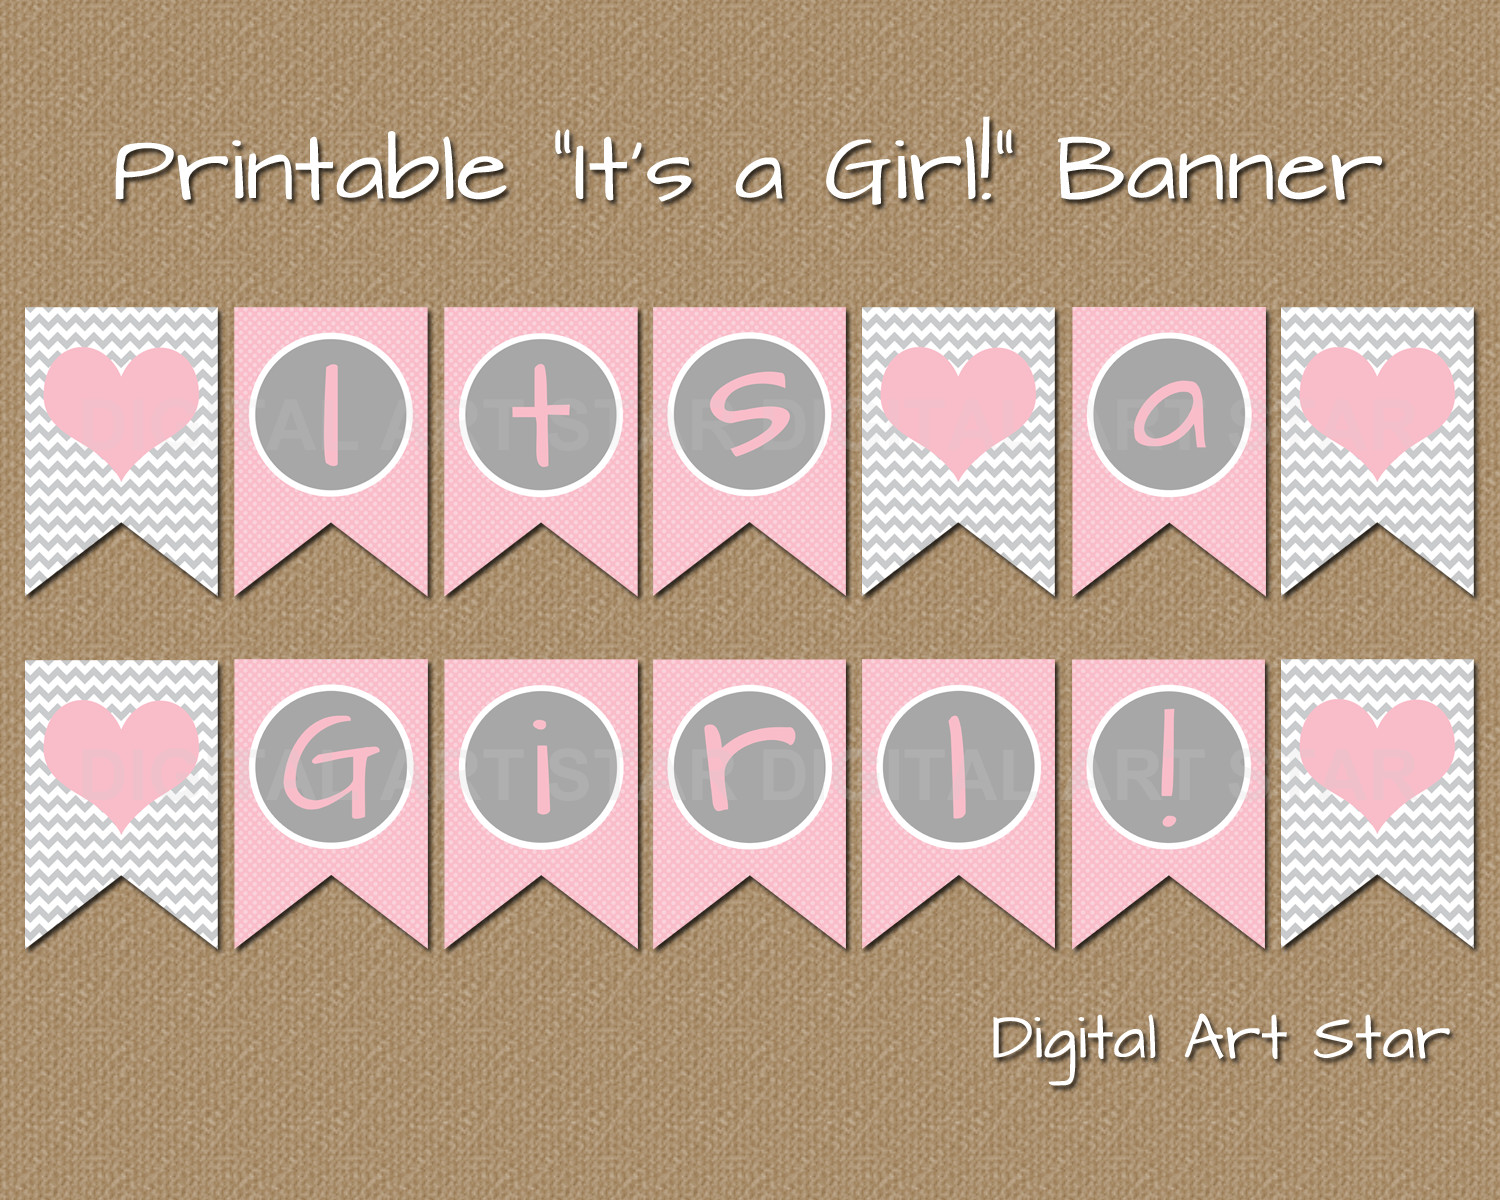 Baby Shower Banner Printable Digital Art Star Printable Party Decor Diy Printable It